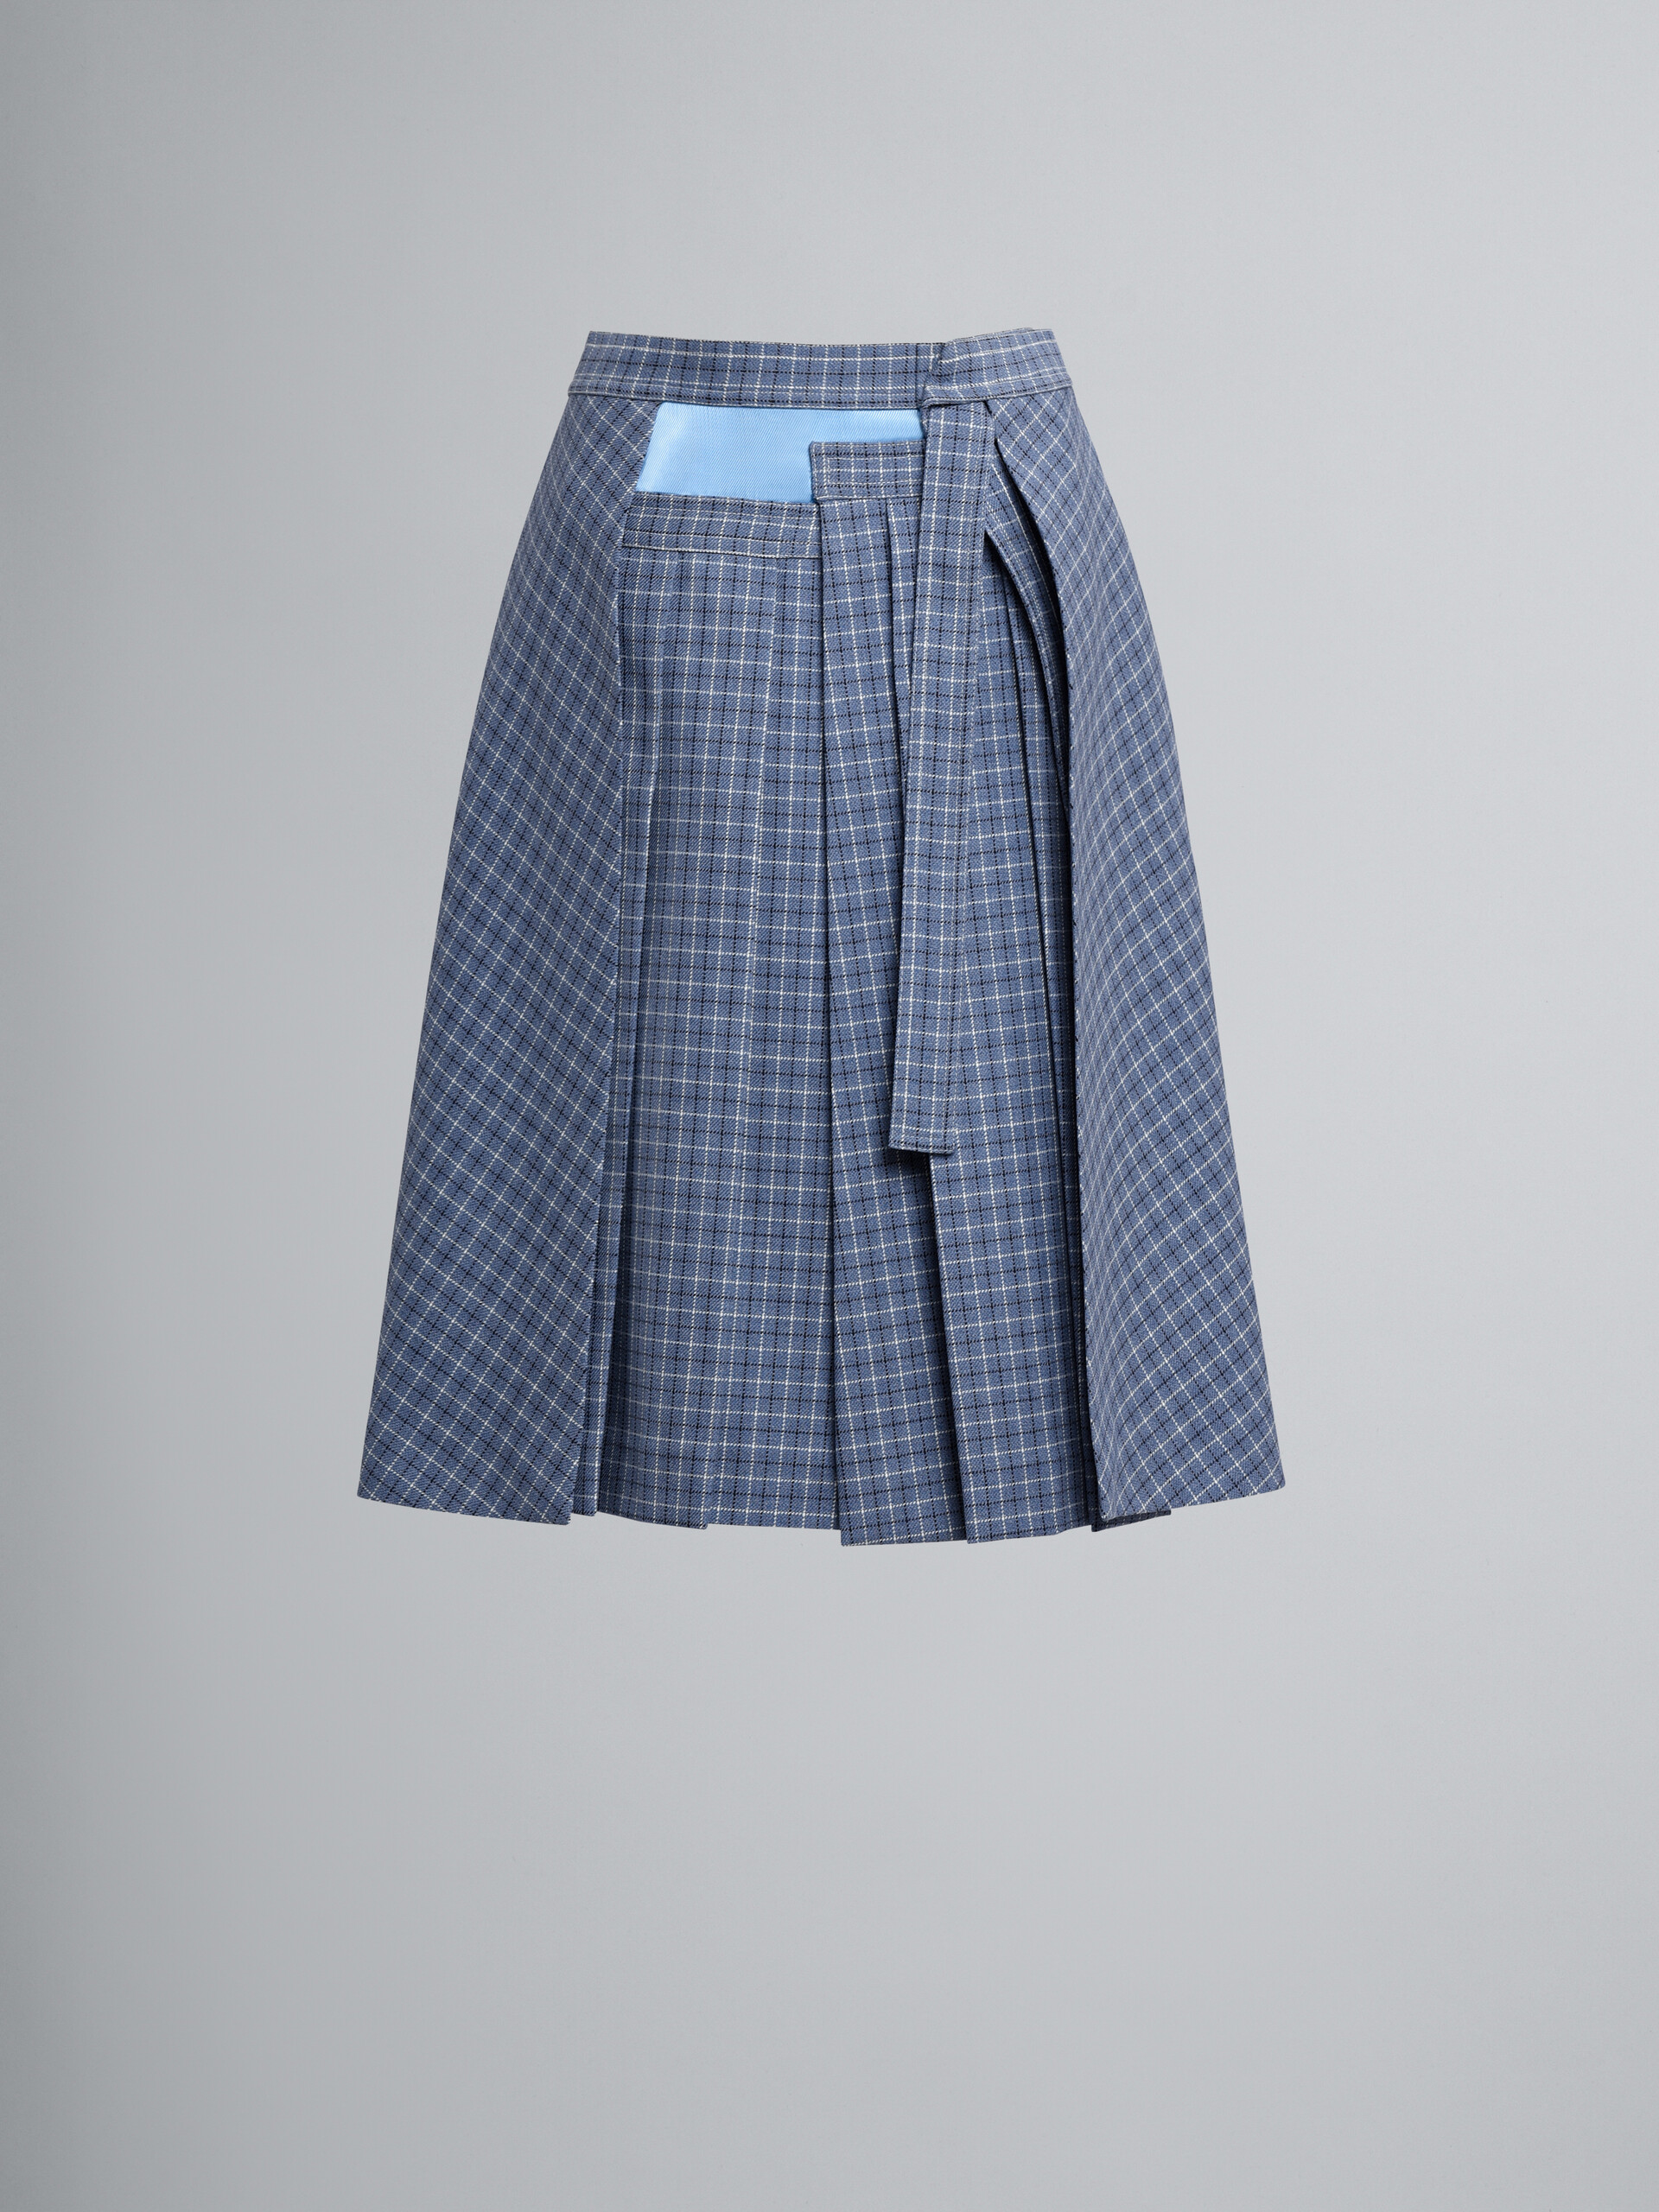 Check wool twill skirt - Skirts - Image 1